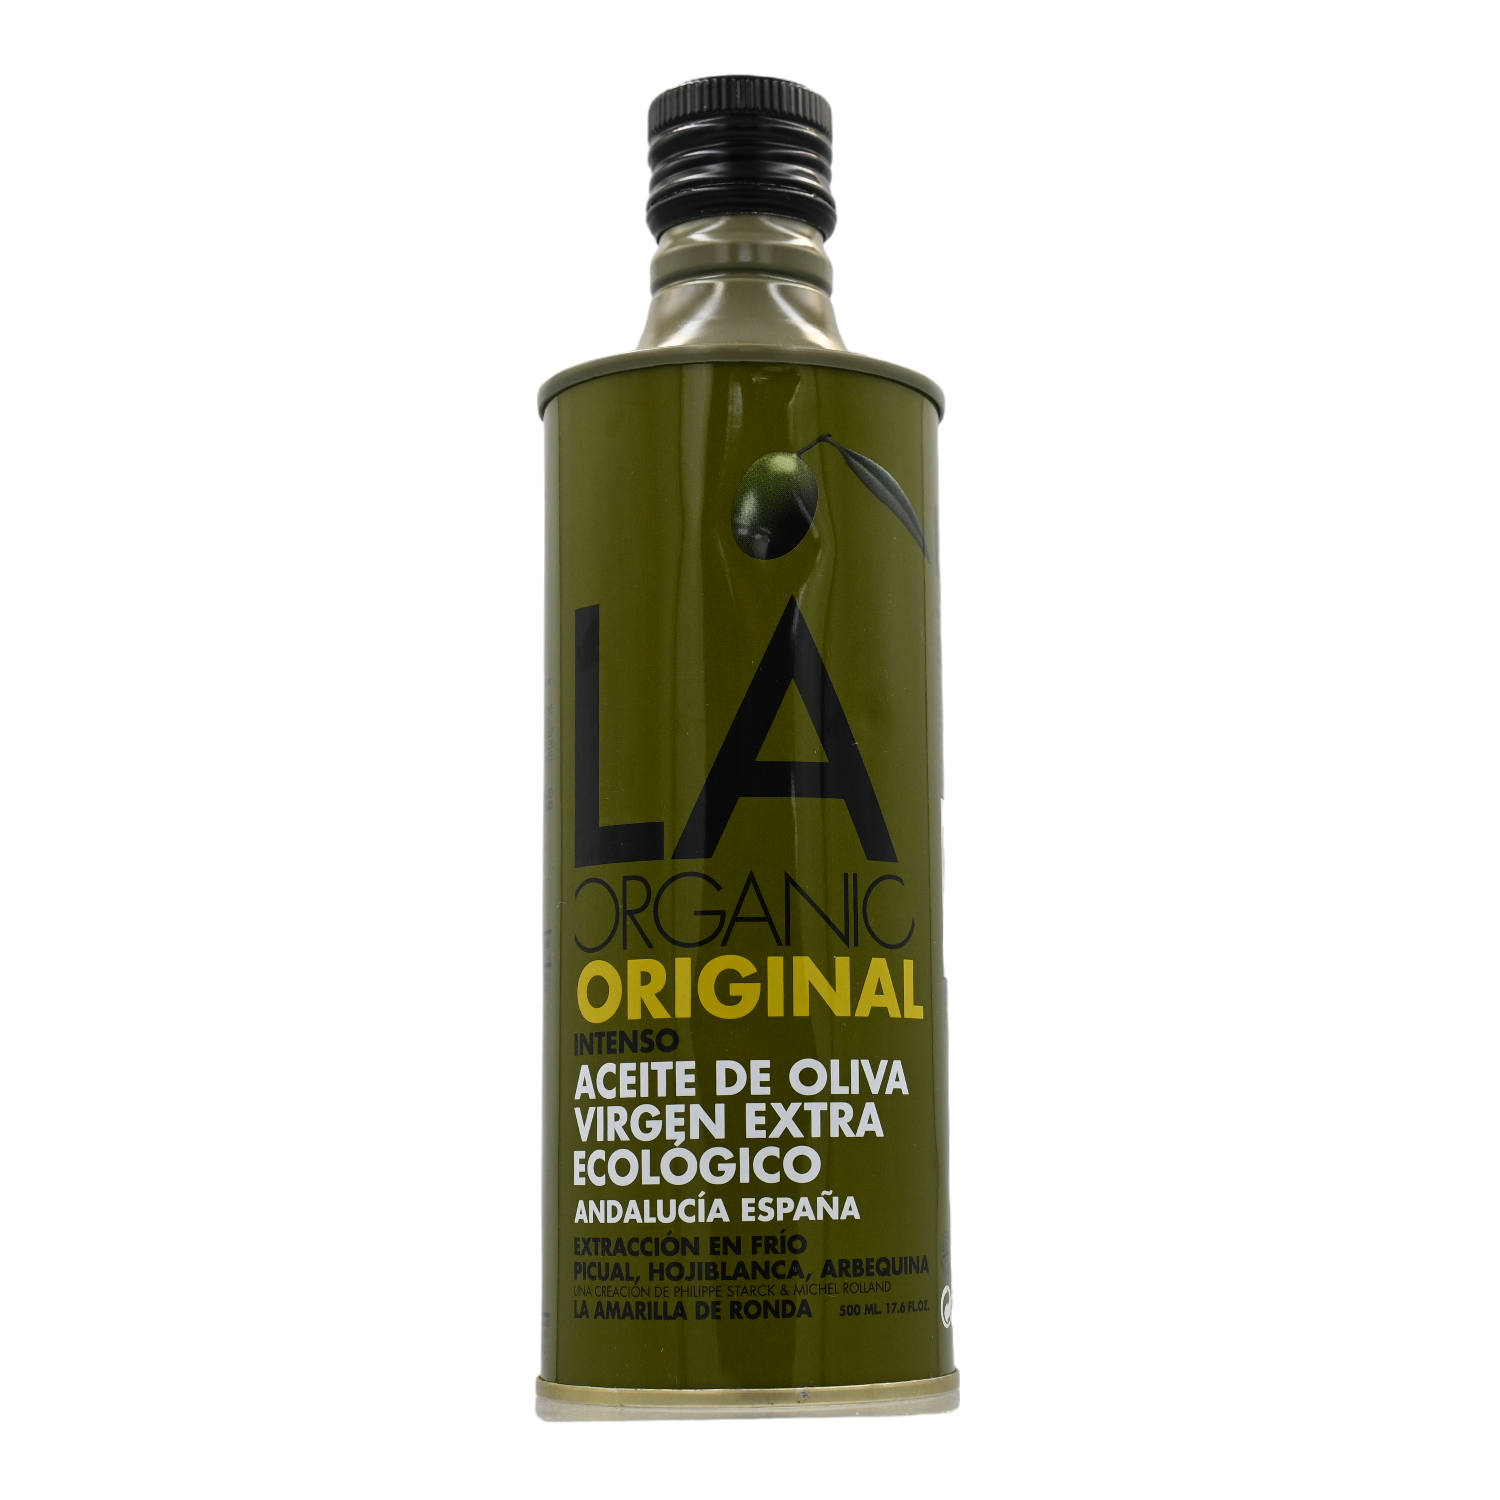 BIO Aceite de oliva virgen extra intenso, LA ORGANIC 0,5 l